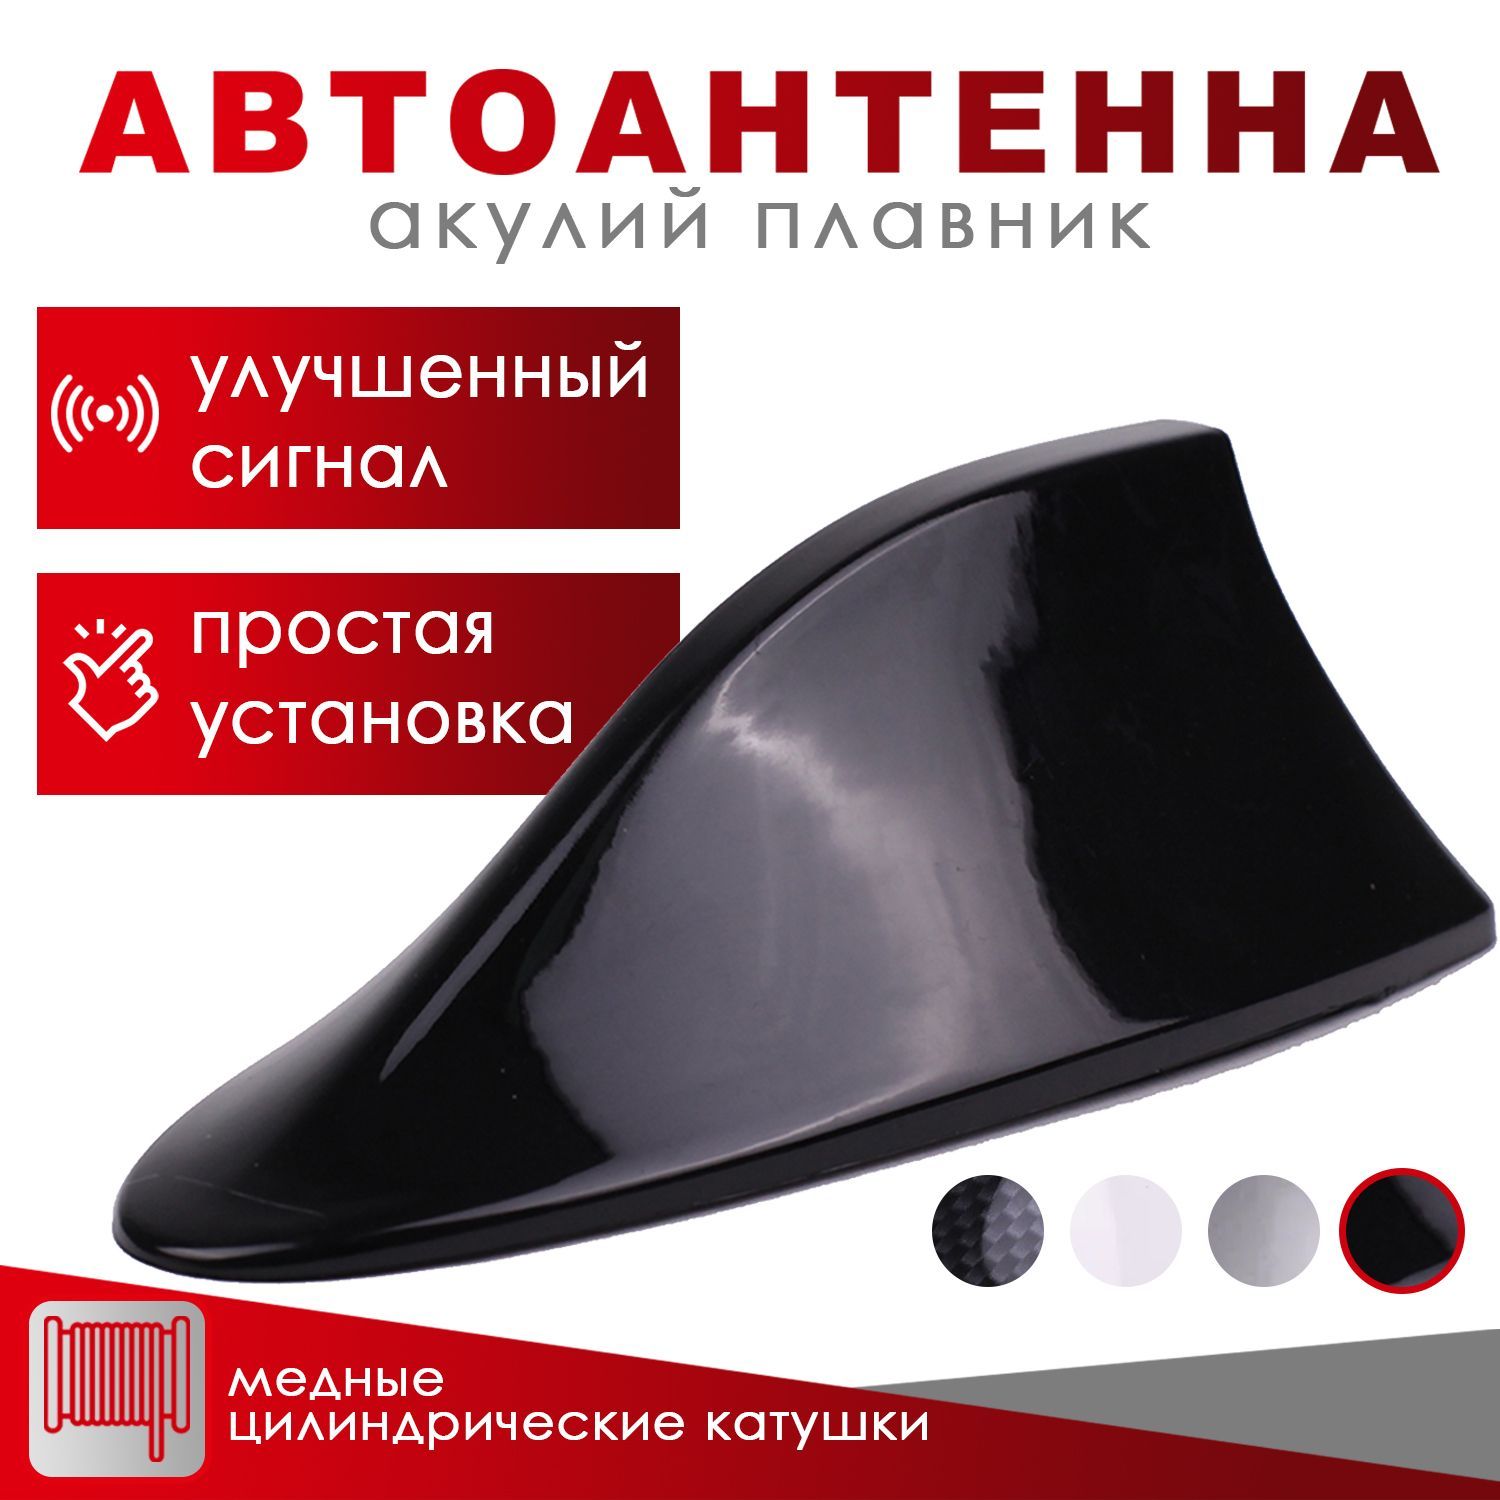 Антенна-плавник универсальная Takara PS-250A, черная (Shark Fin Antenna)